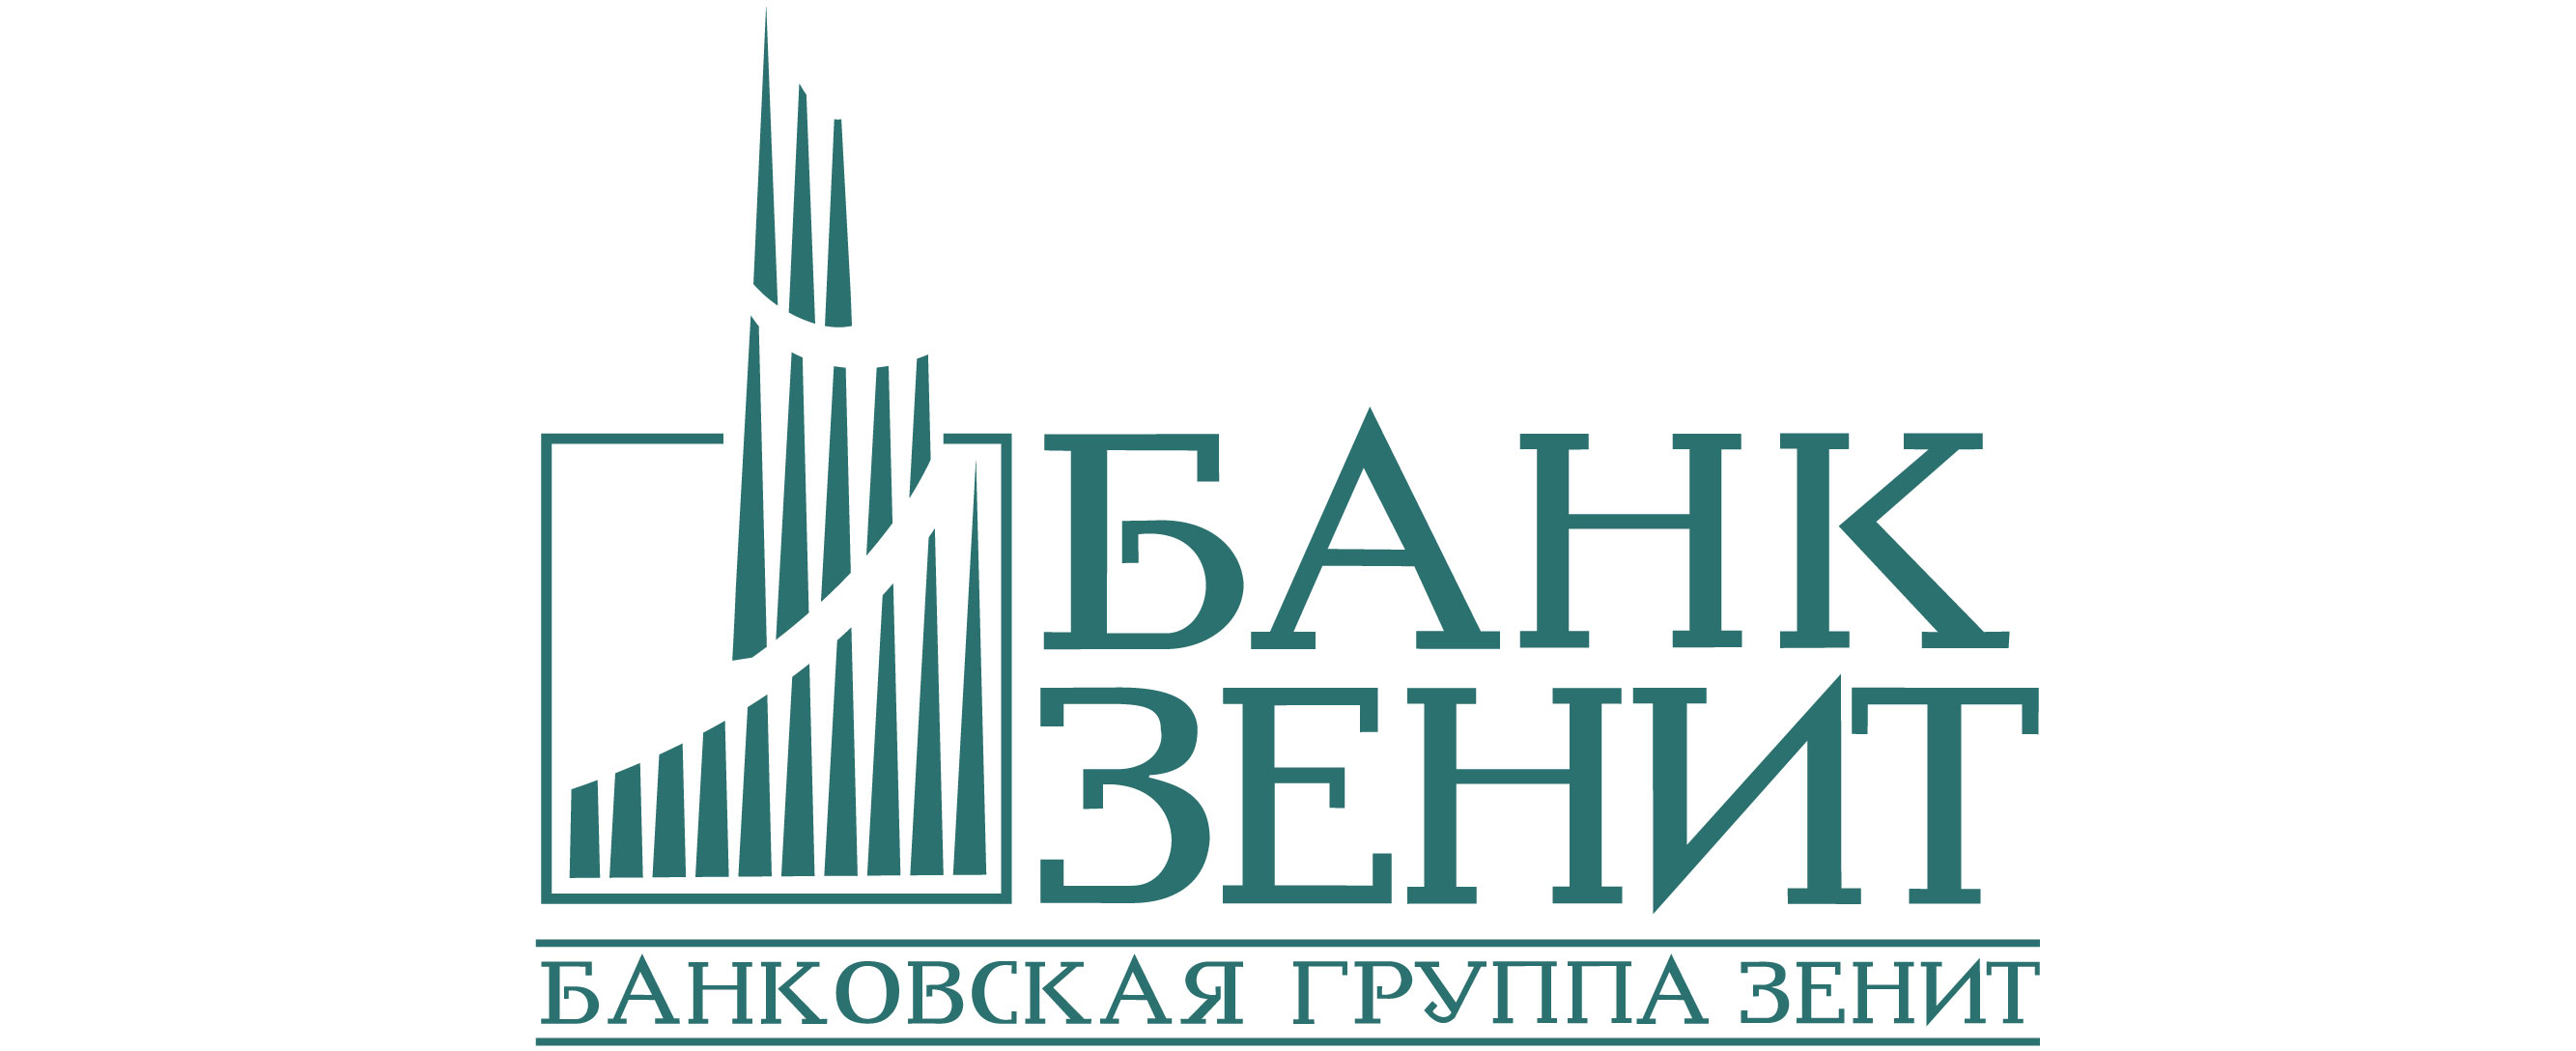 Банк ЗЕНИТ предложил клиентам кэшбэк до 30%